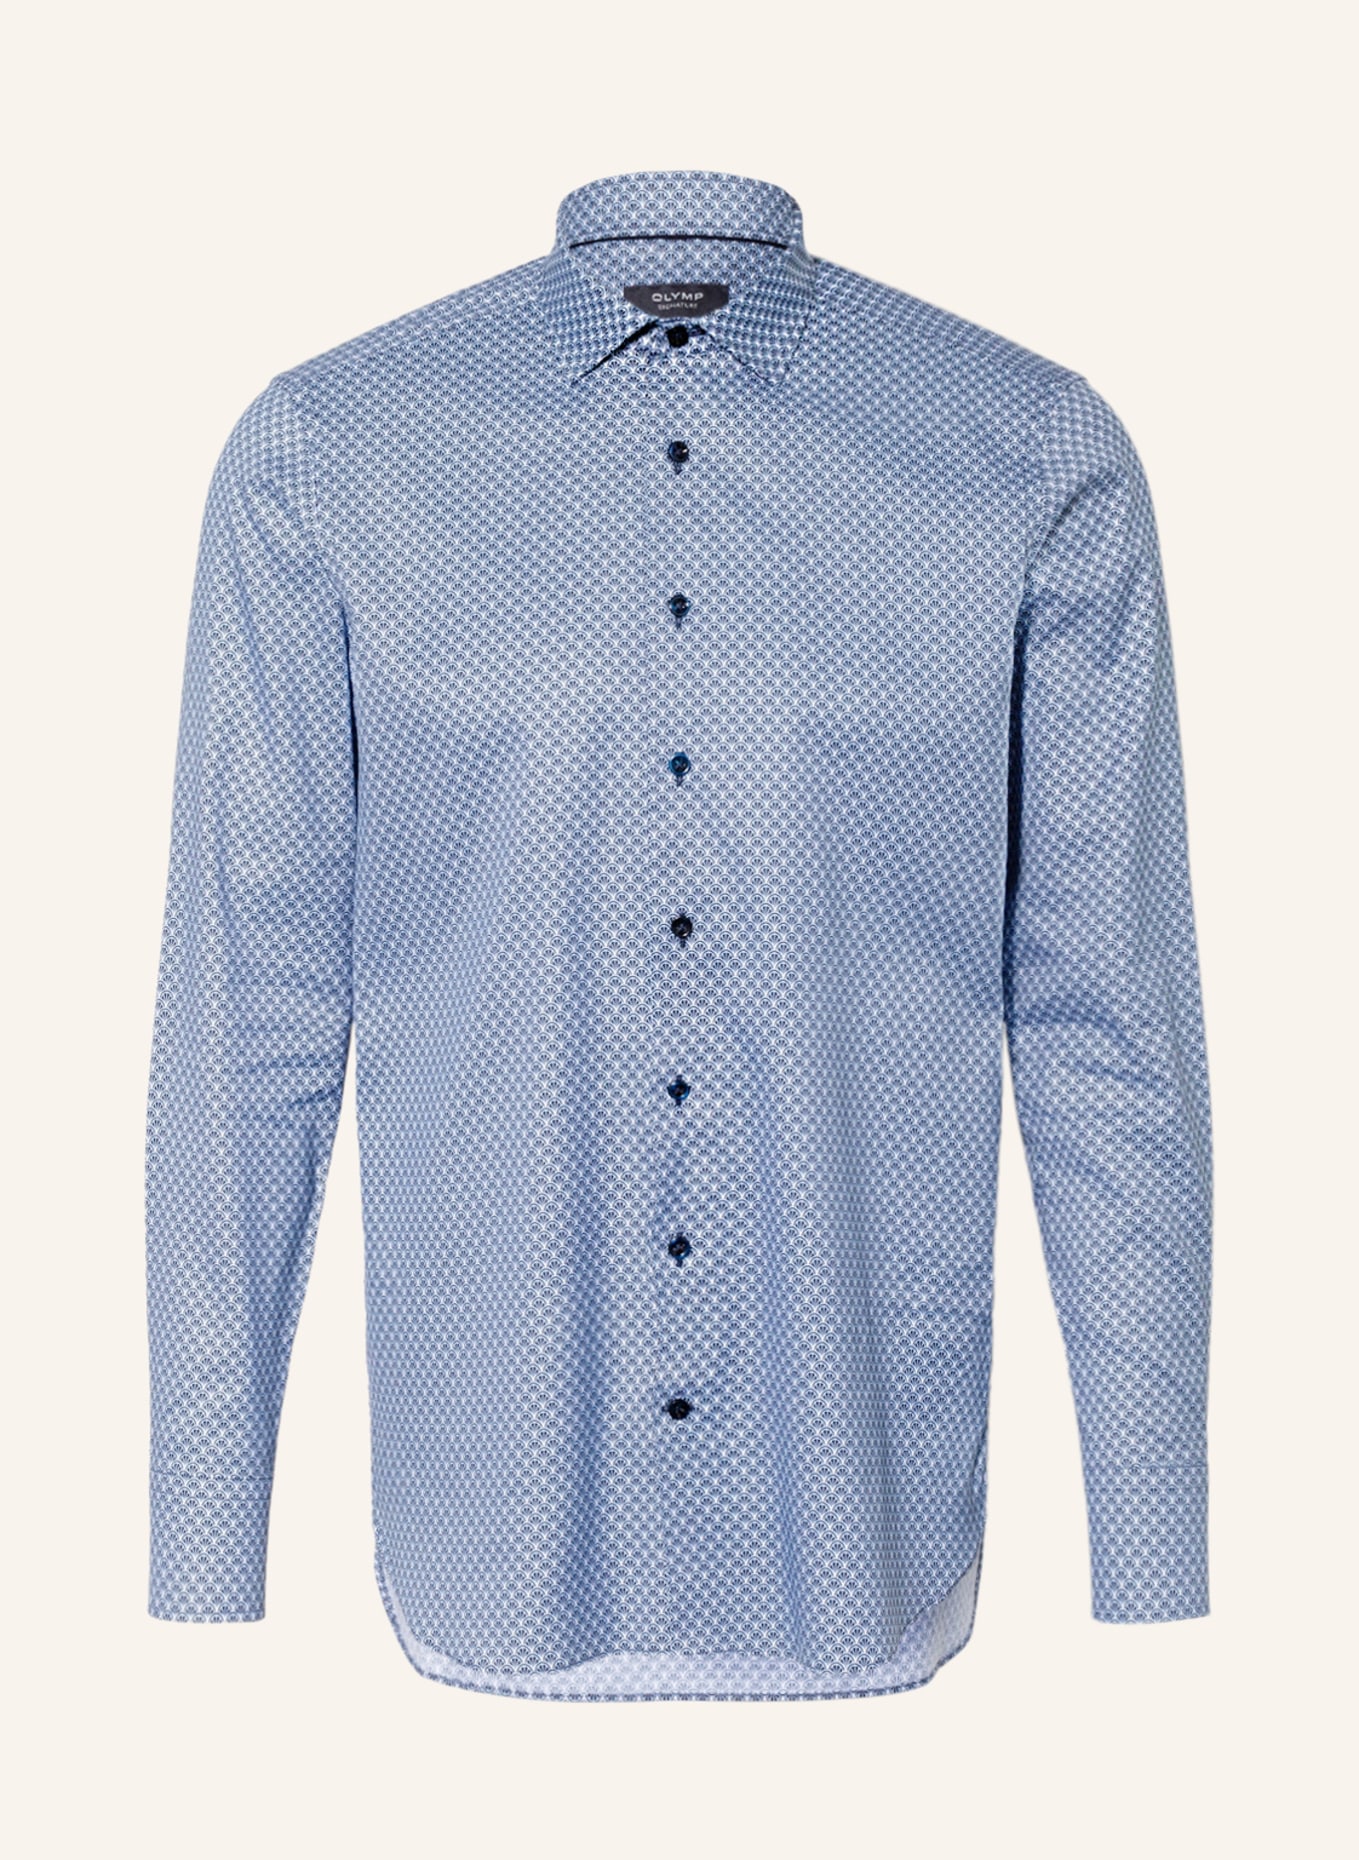 OLYMP blau/ in Hemd dunkelblau fit SIGNATURE tailored